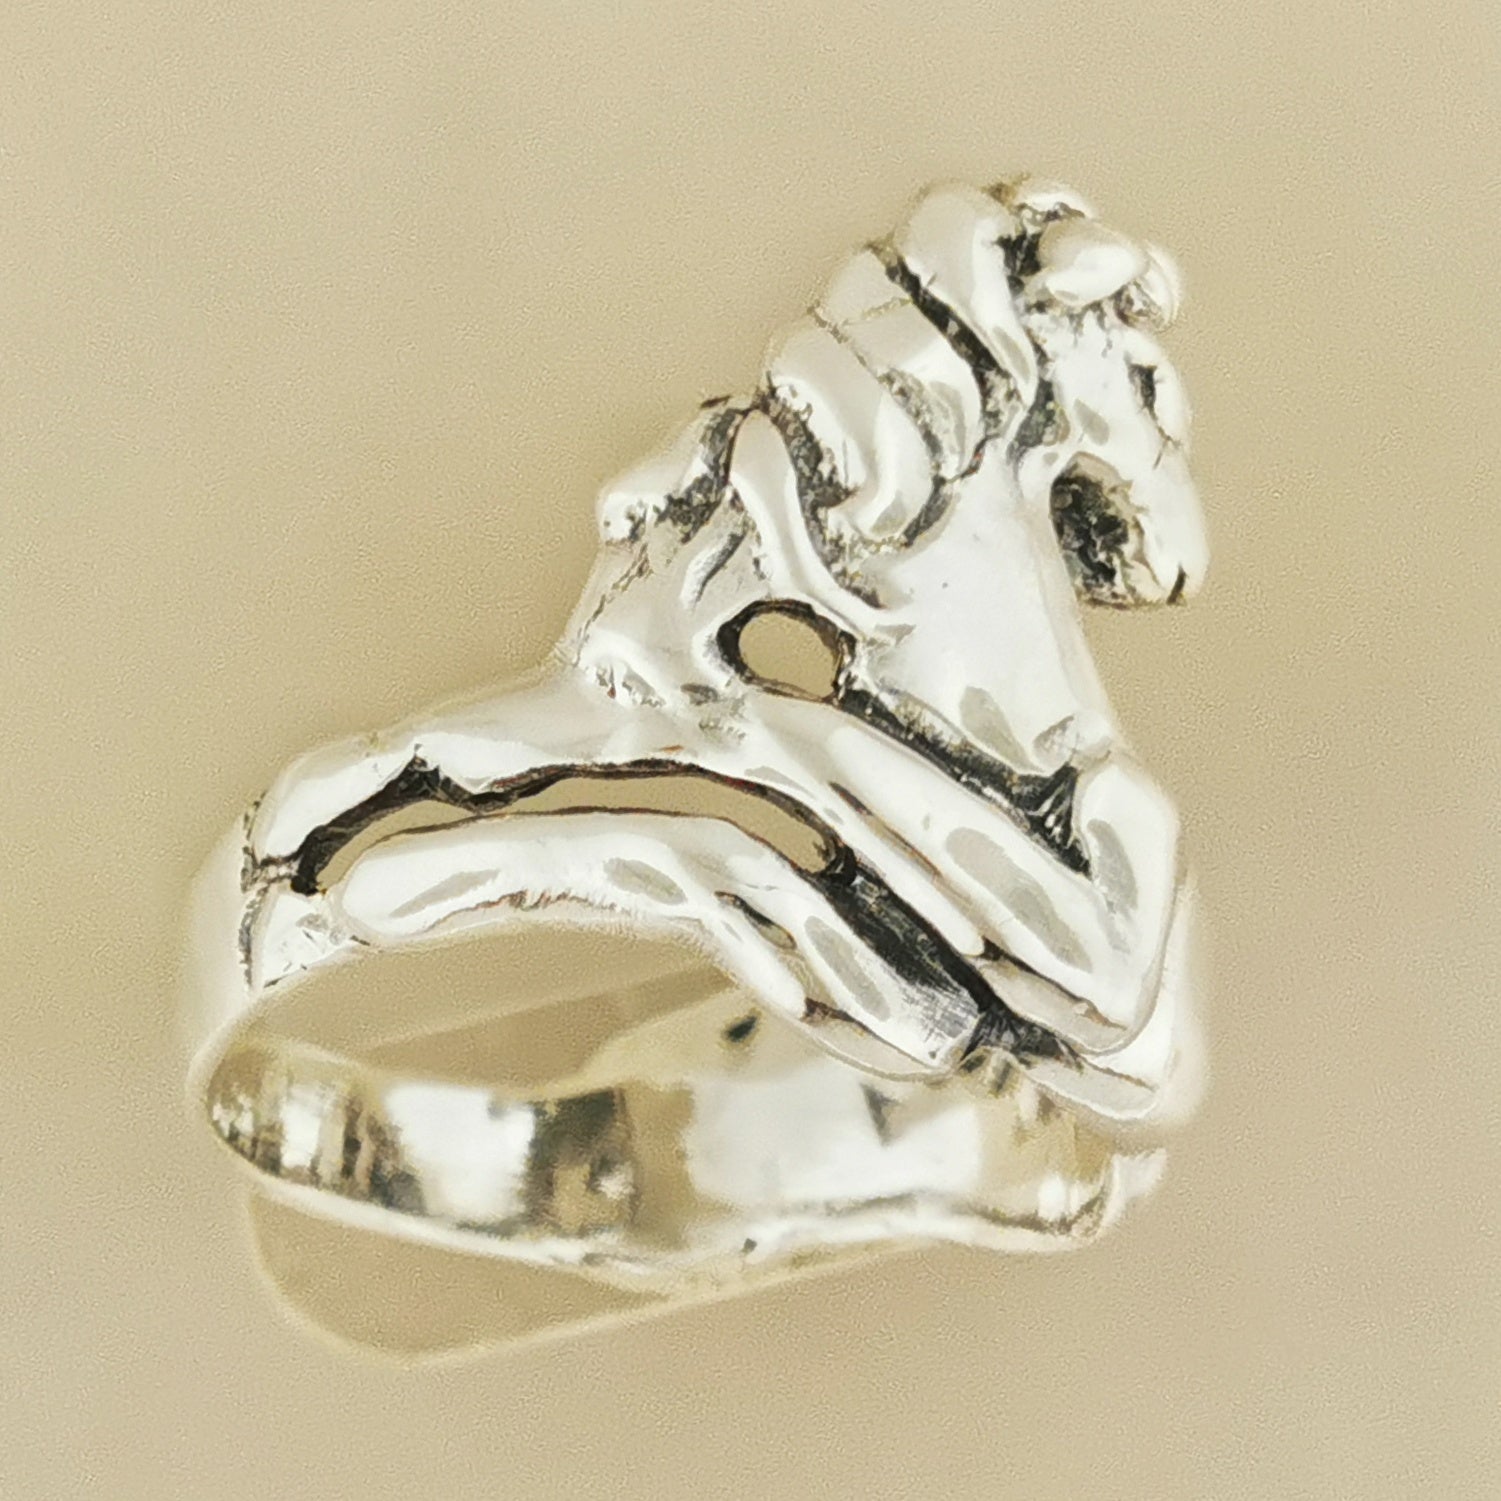 unicorn ring, silver unicorn ring, sterling silver unicorn ring, medieval unicorn ring, i love unicorns, unicorn gift, unicorn jewelry, unicorn jewellery, fantasy ring, fantastical ring, the last unicorn, magical unicorn ring, fantastical ring, magical ring, large unicorn ring